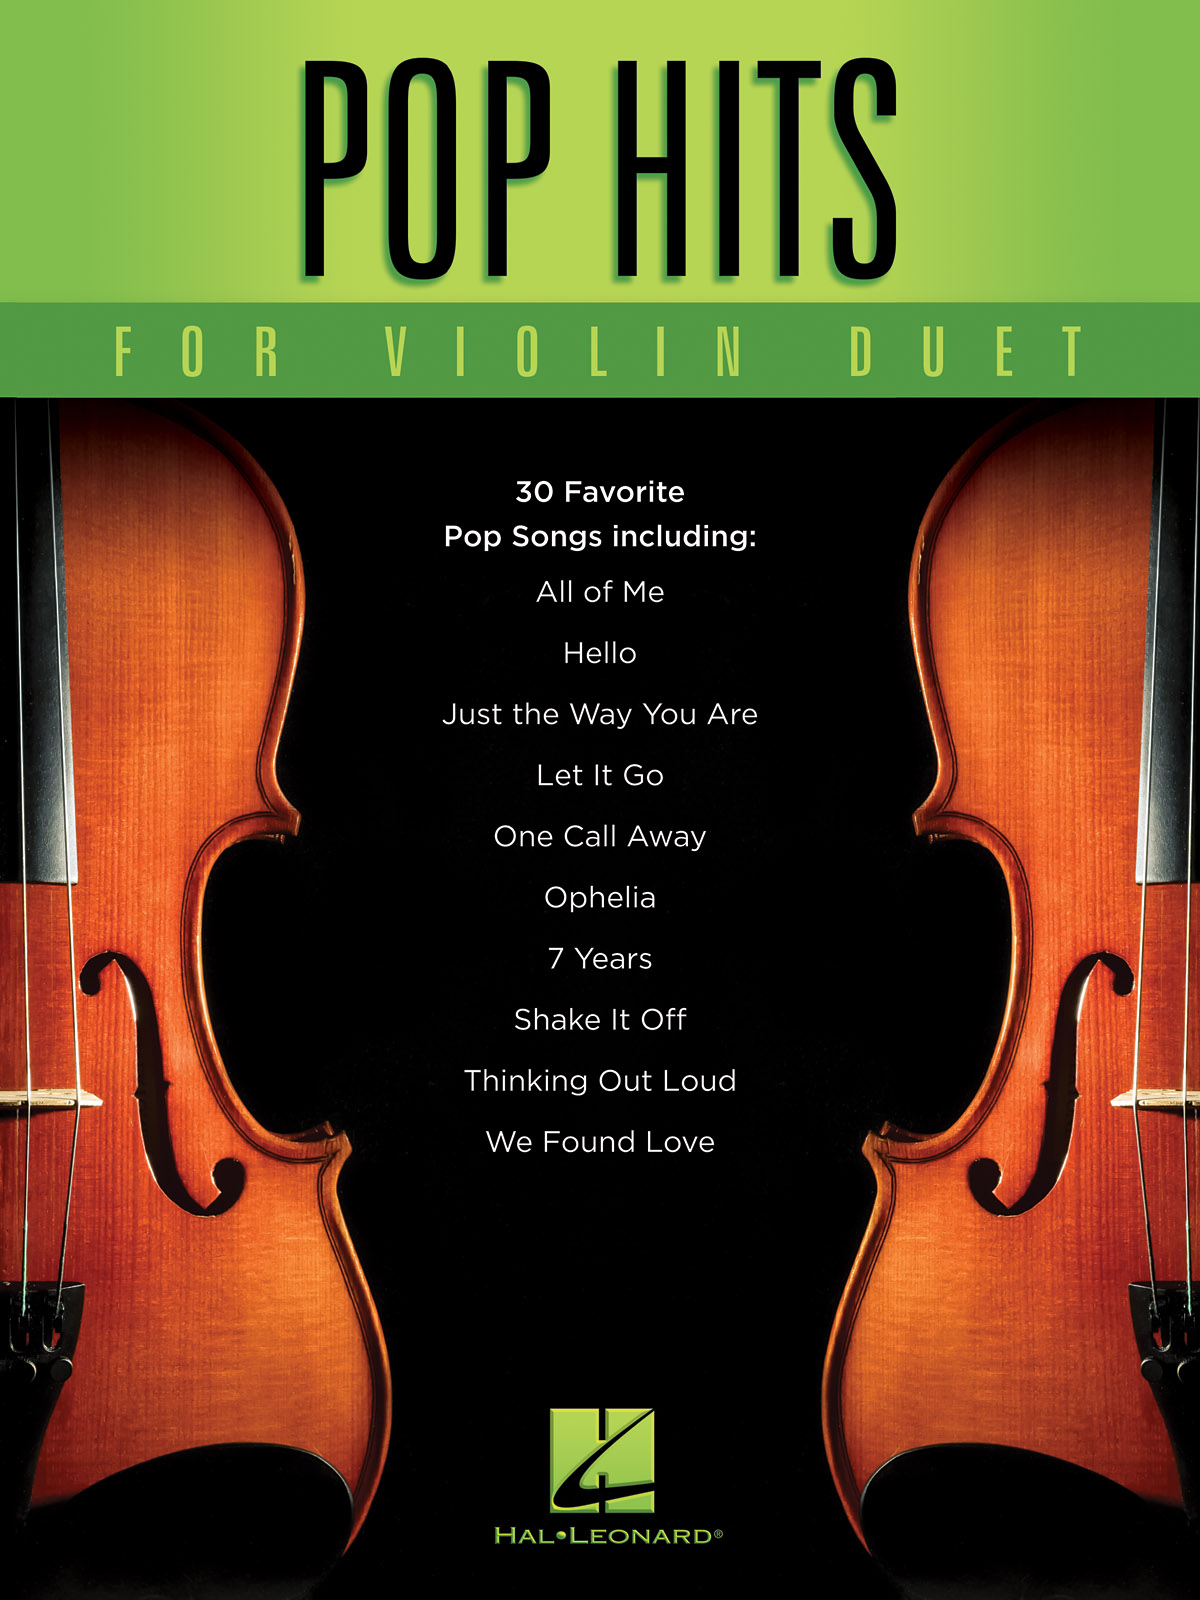 Pop Hits For Violin Duet noty pro dvoje housle